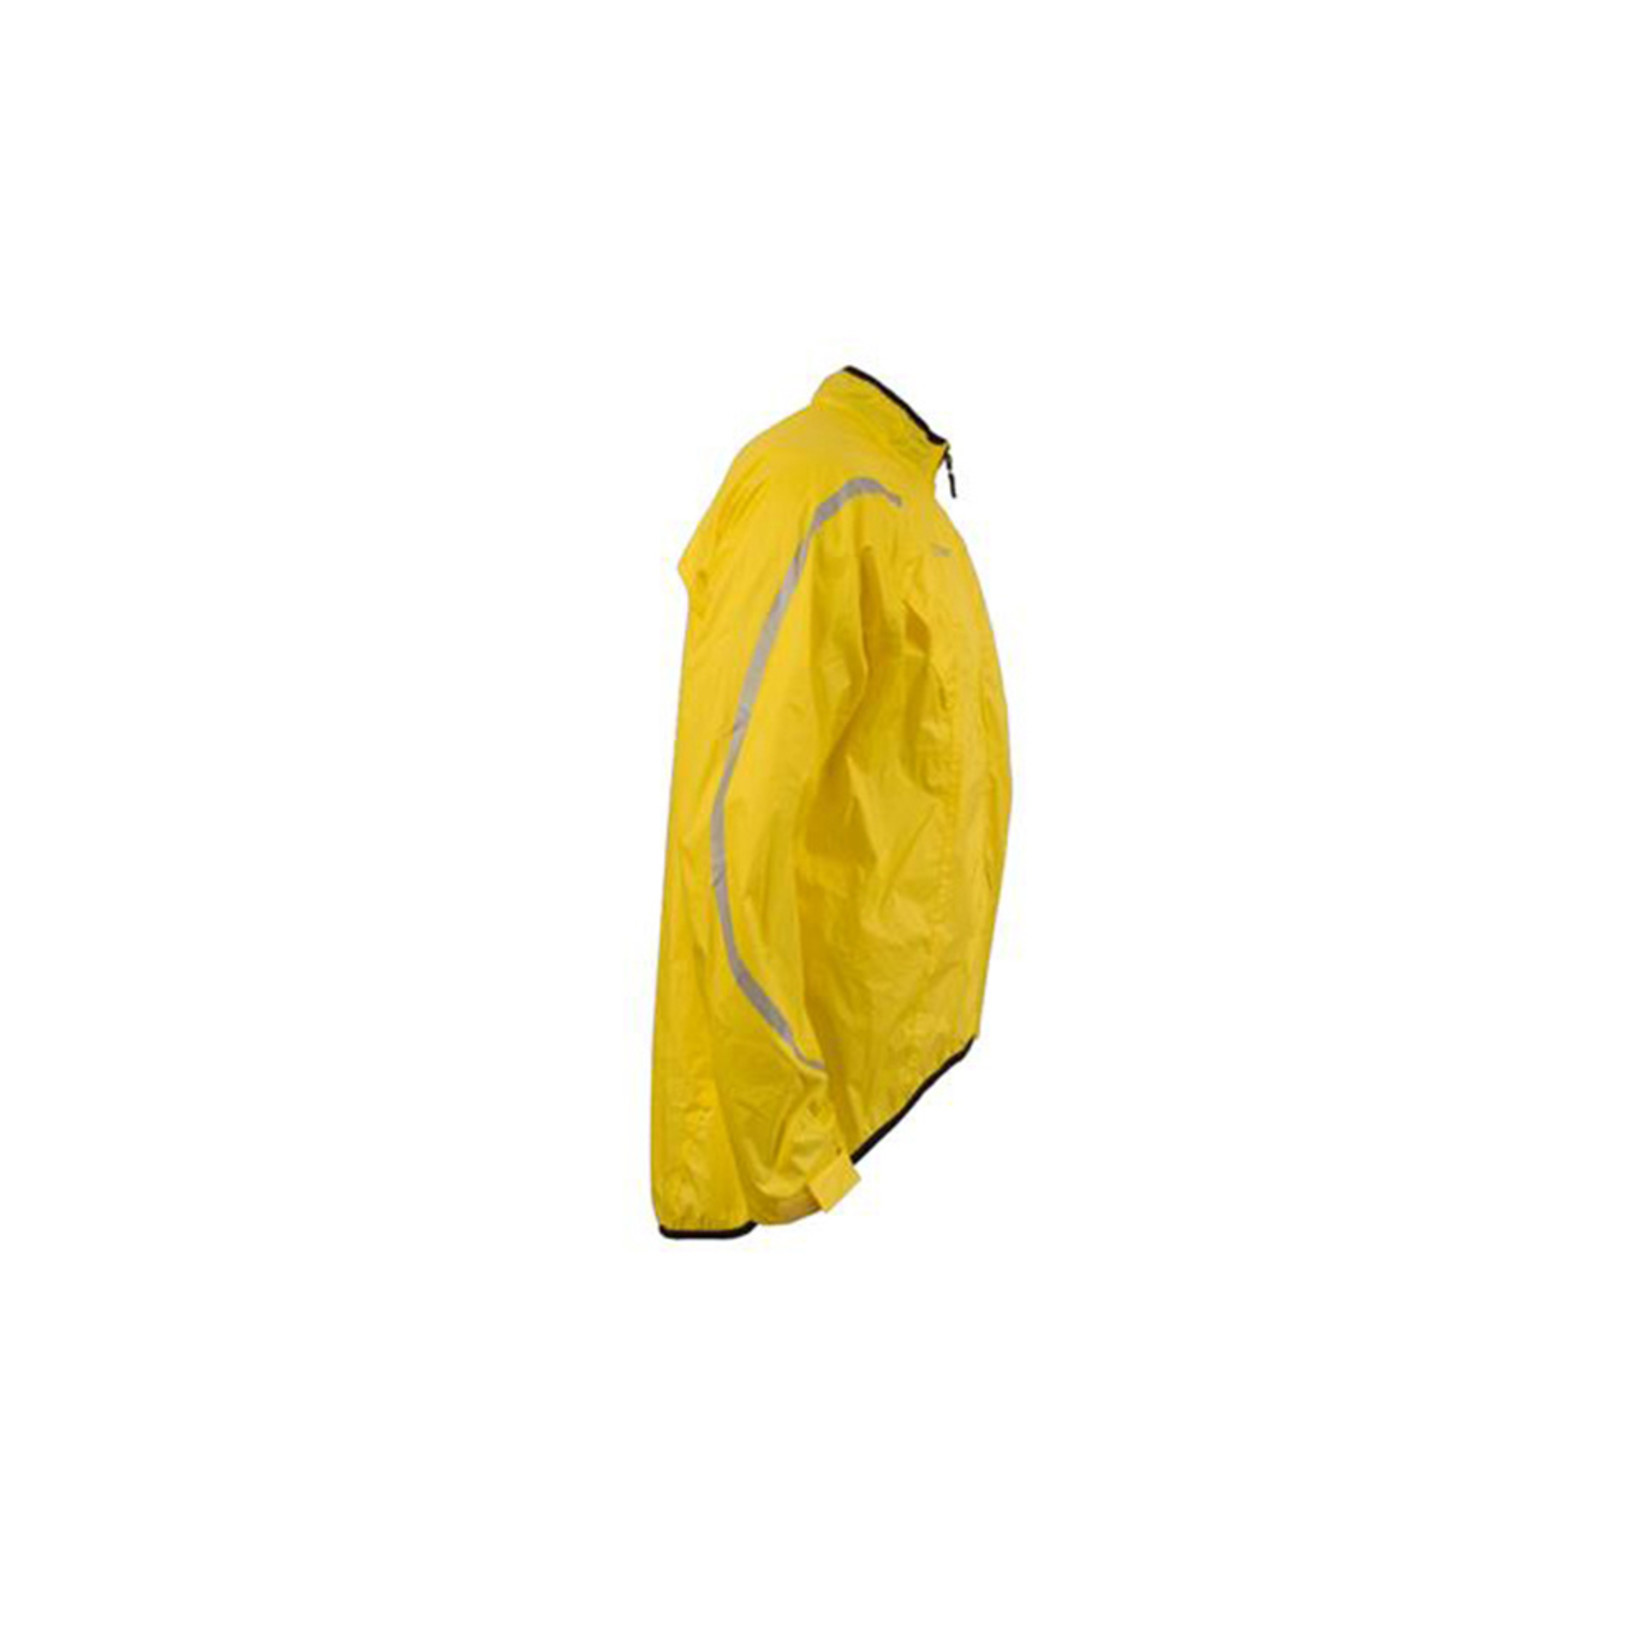 Azur Azur Chaser Jacket - Reflective Waterproof - Fluro Yellow - Small